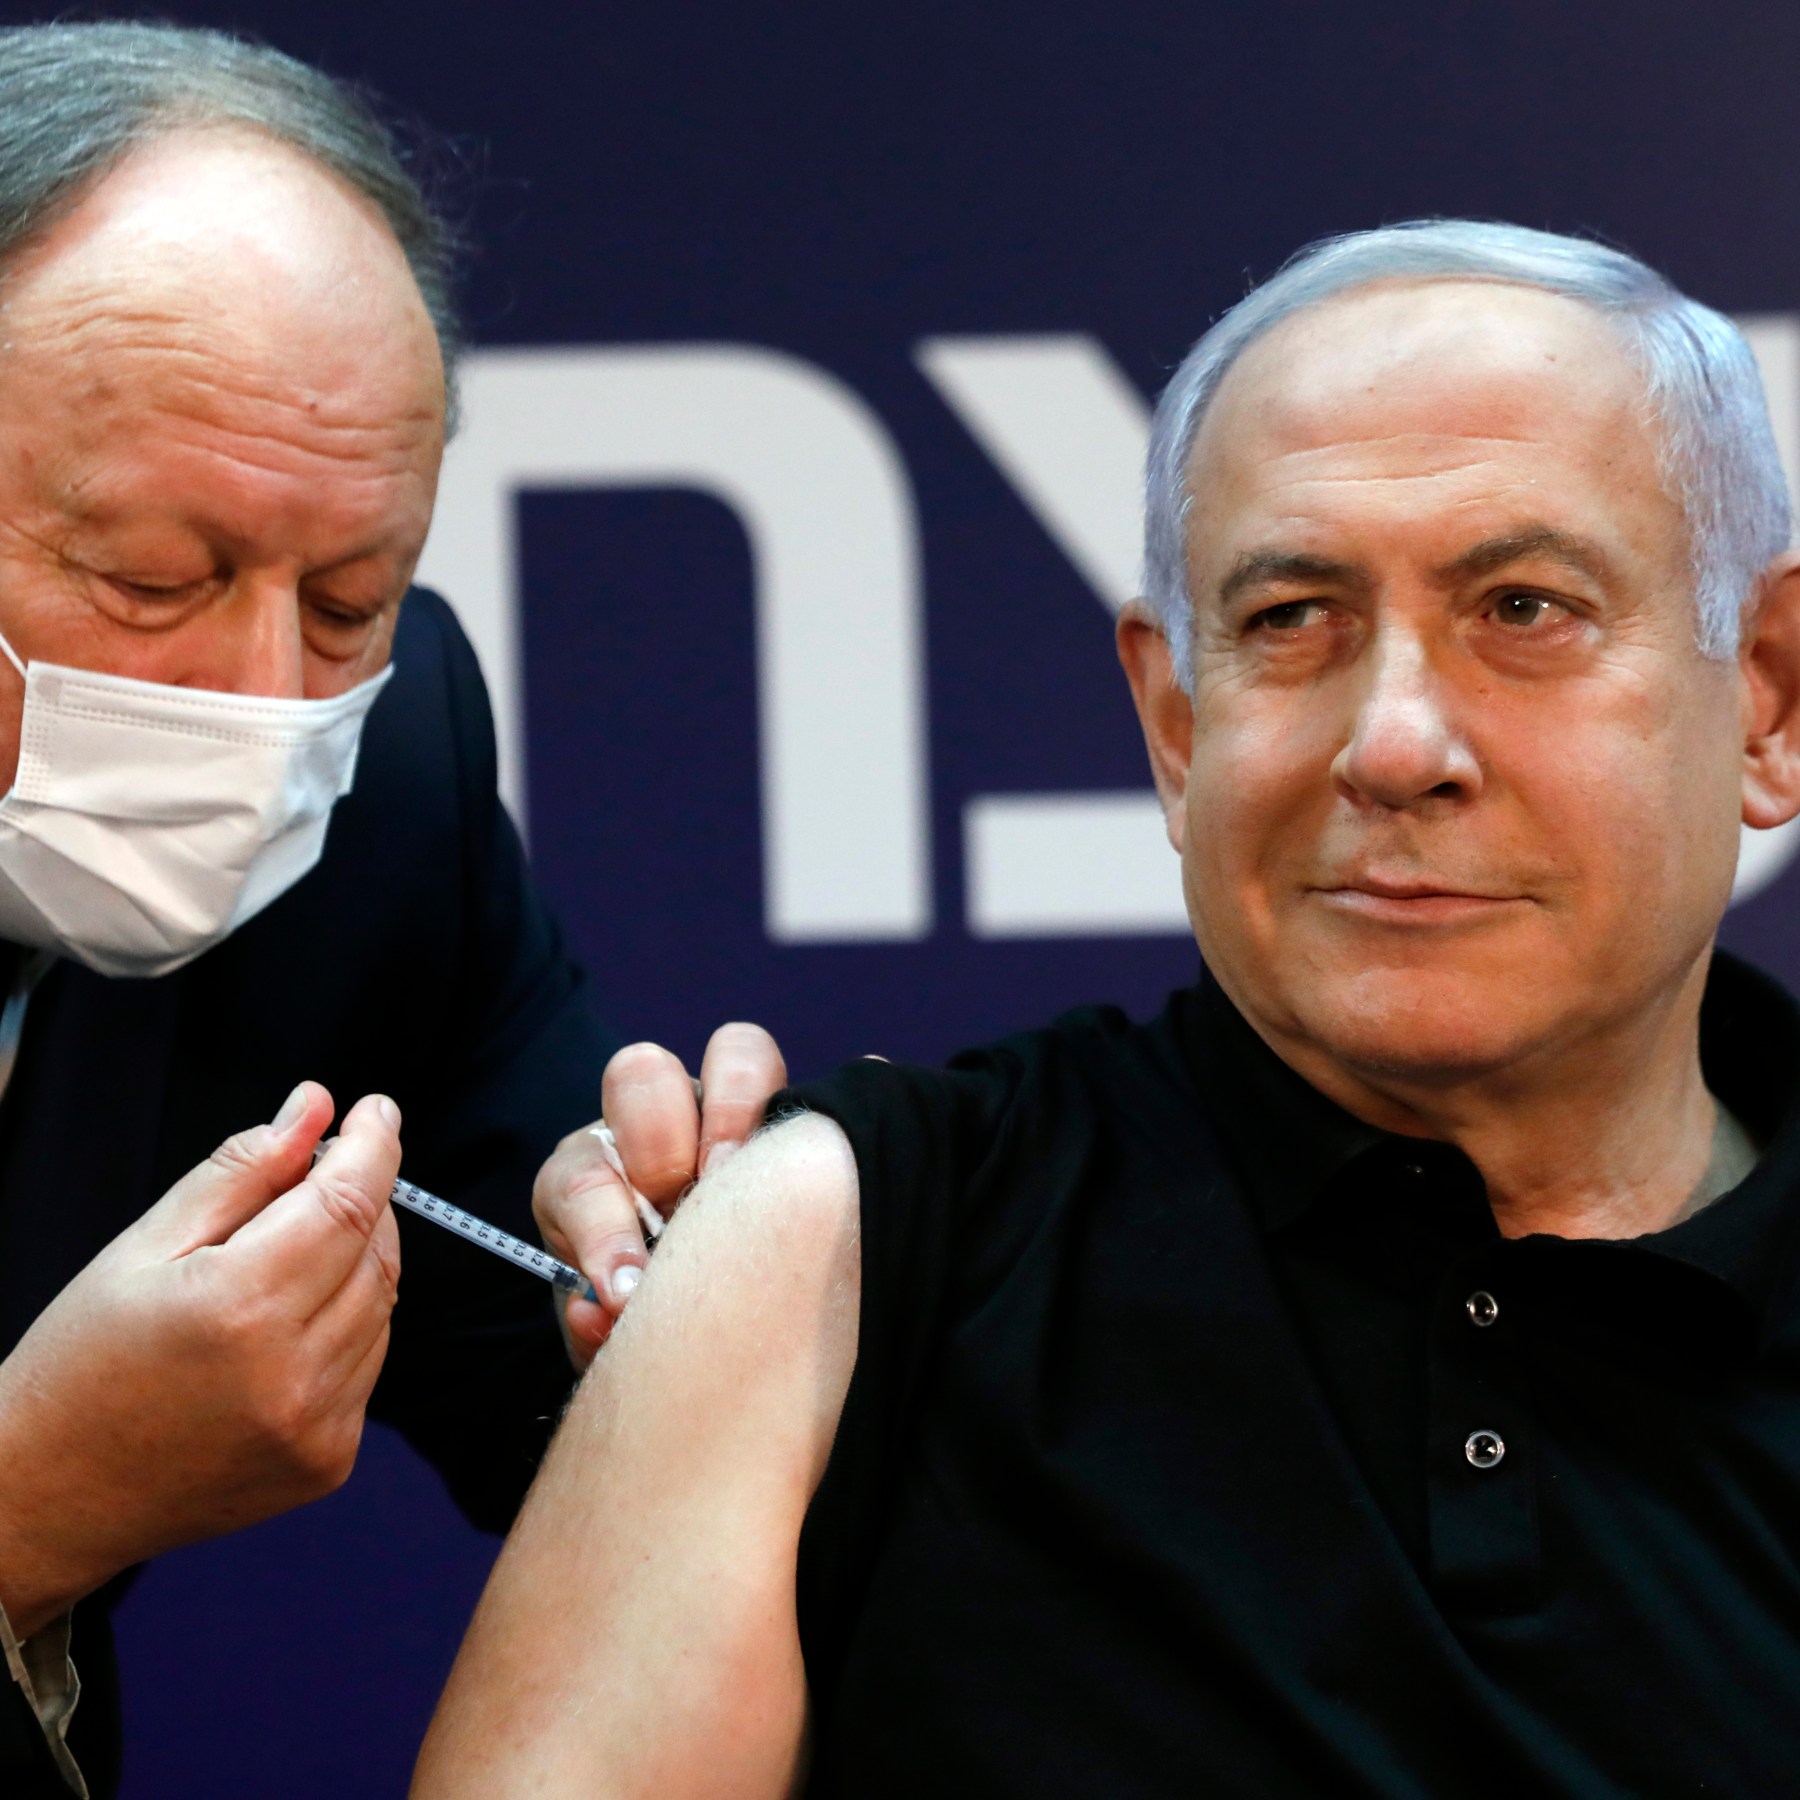 Netanyahu gets COVID vaccine, starts Israel roll-out | Coronavirus pandemic  News | Al Jazeera